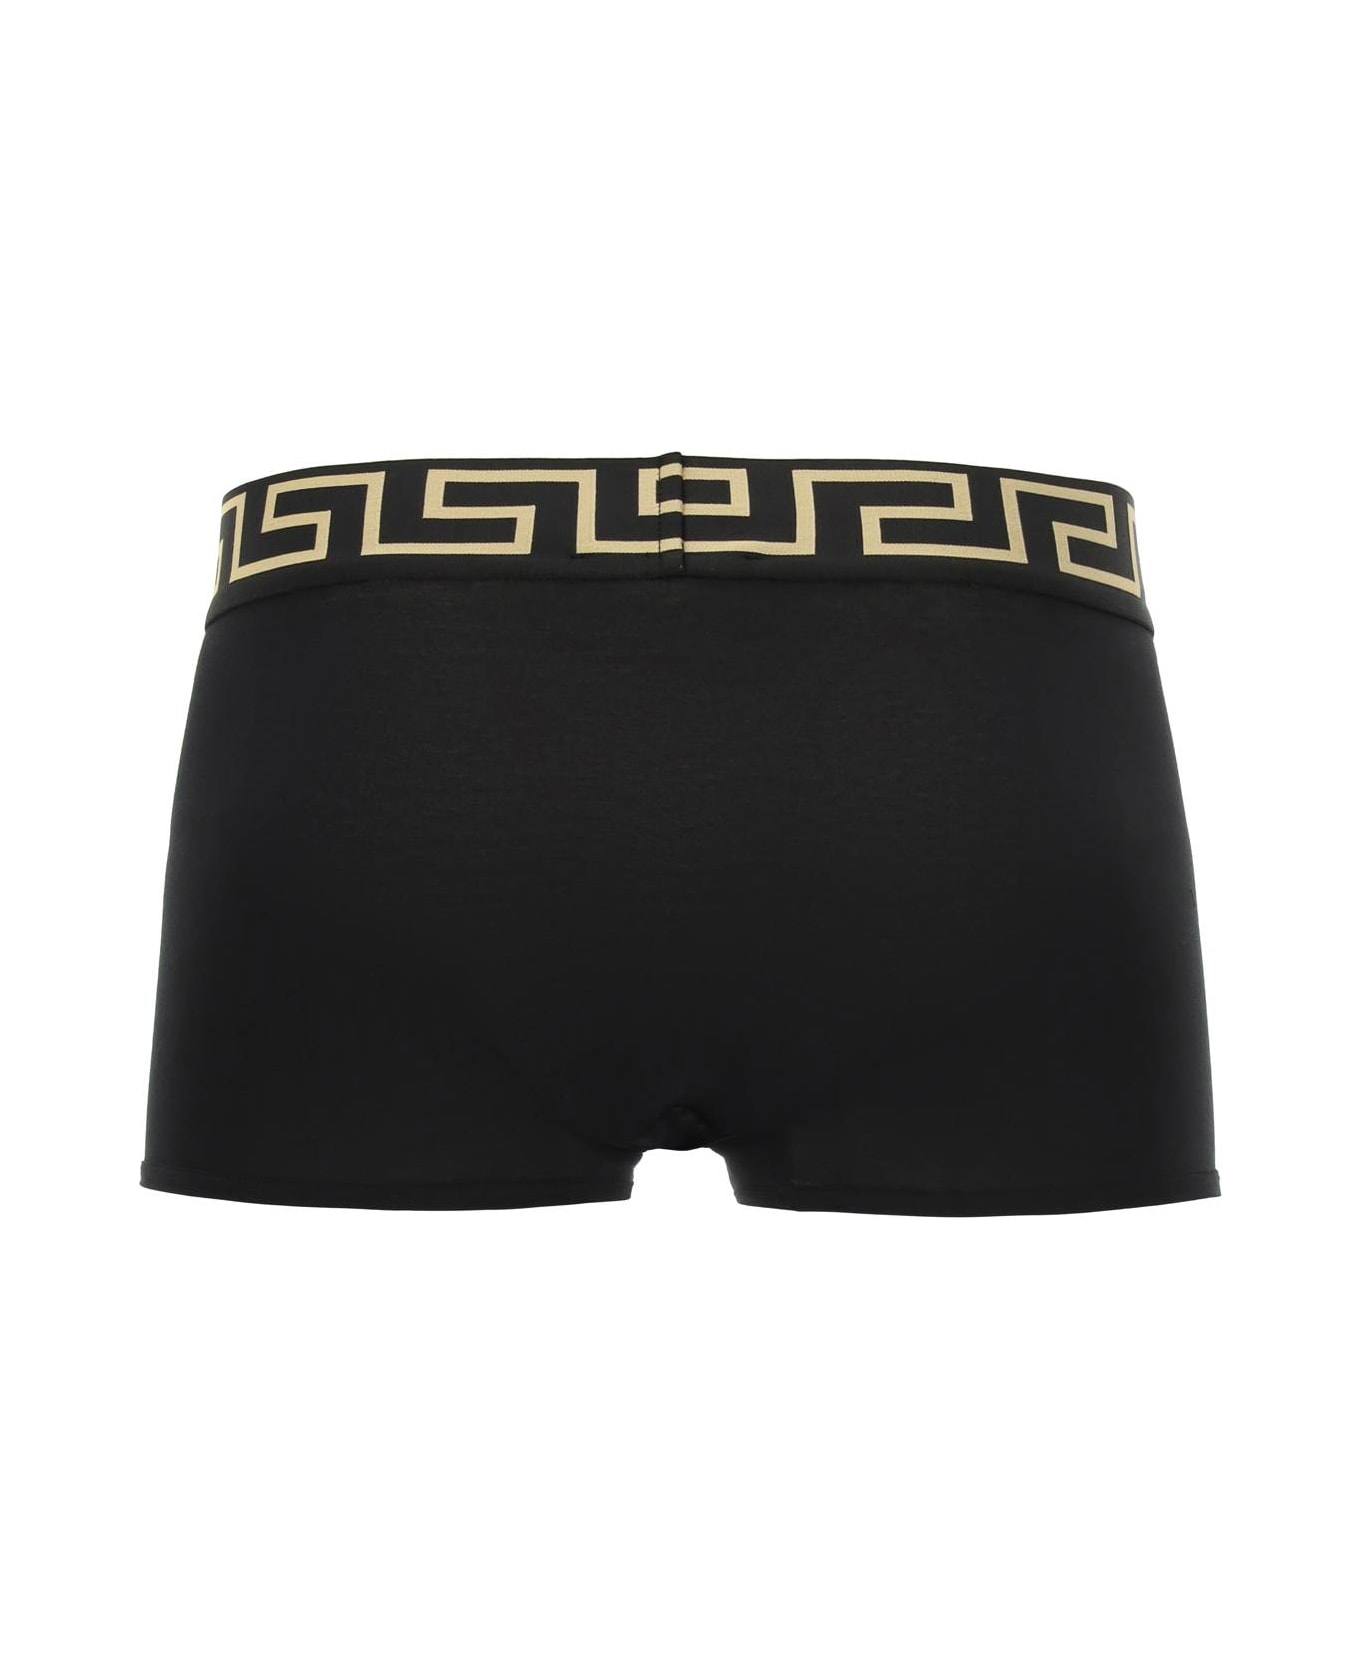 Versace Greca Border Underwear Trunks - G Black Gold